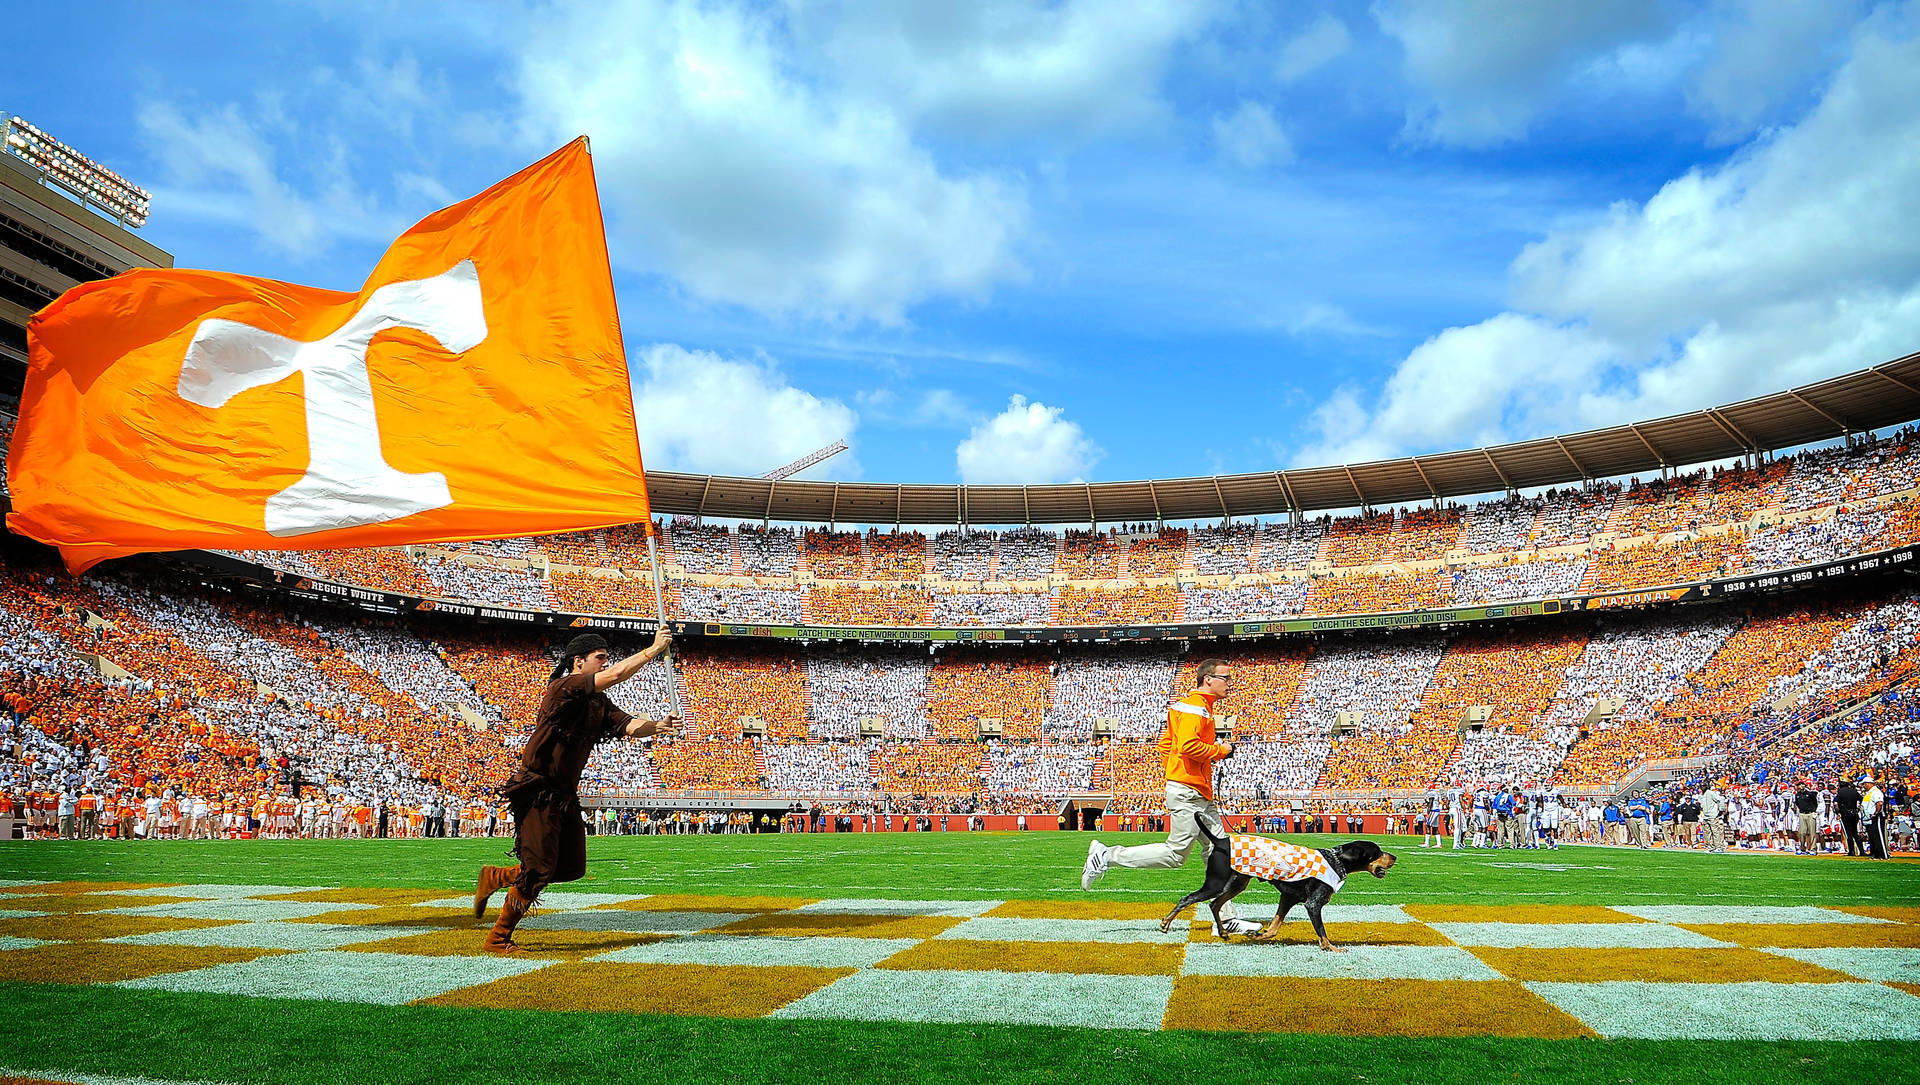 University Of Tennessee Flag In Stadium Wallpaper